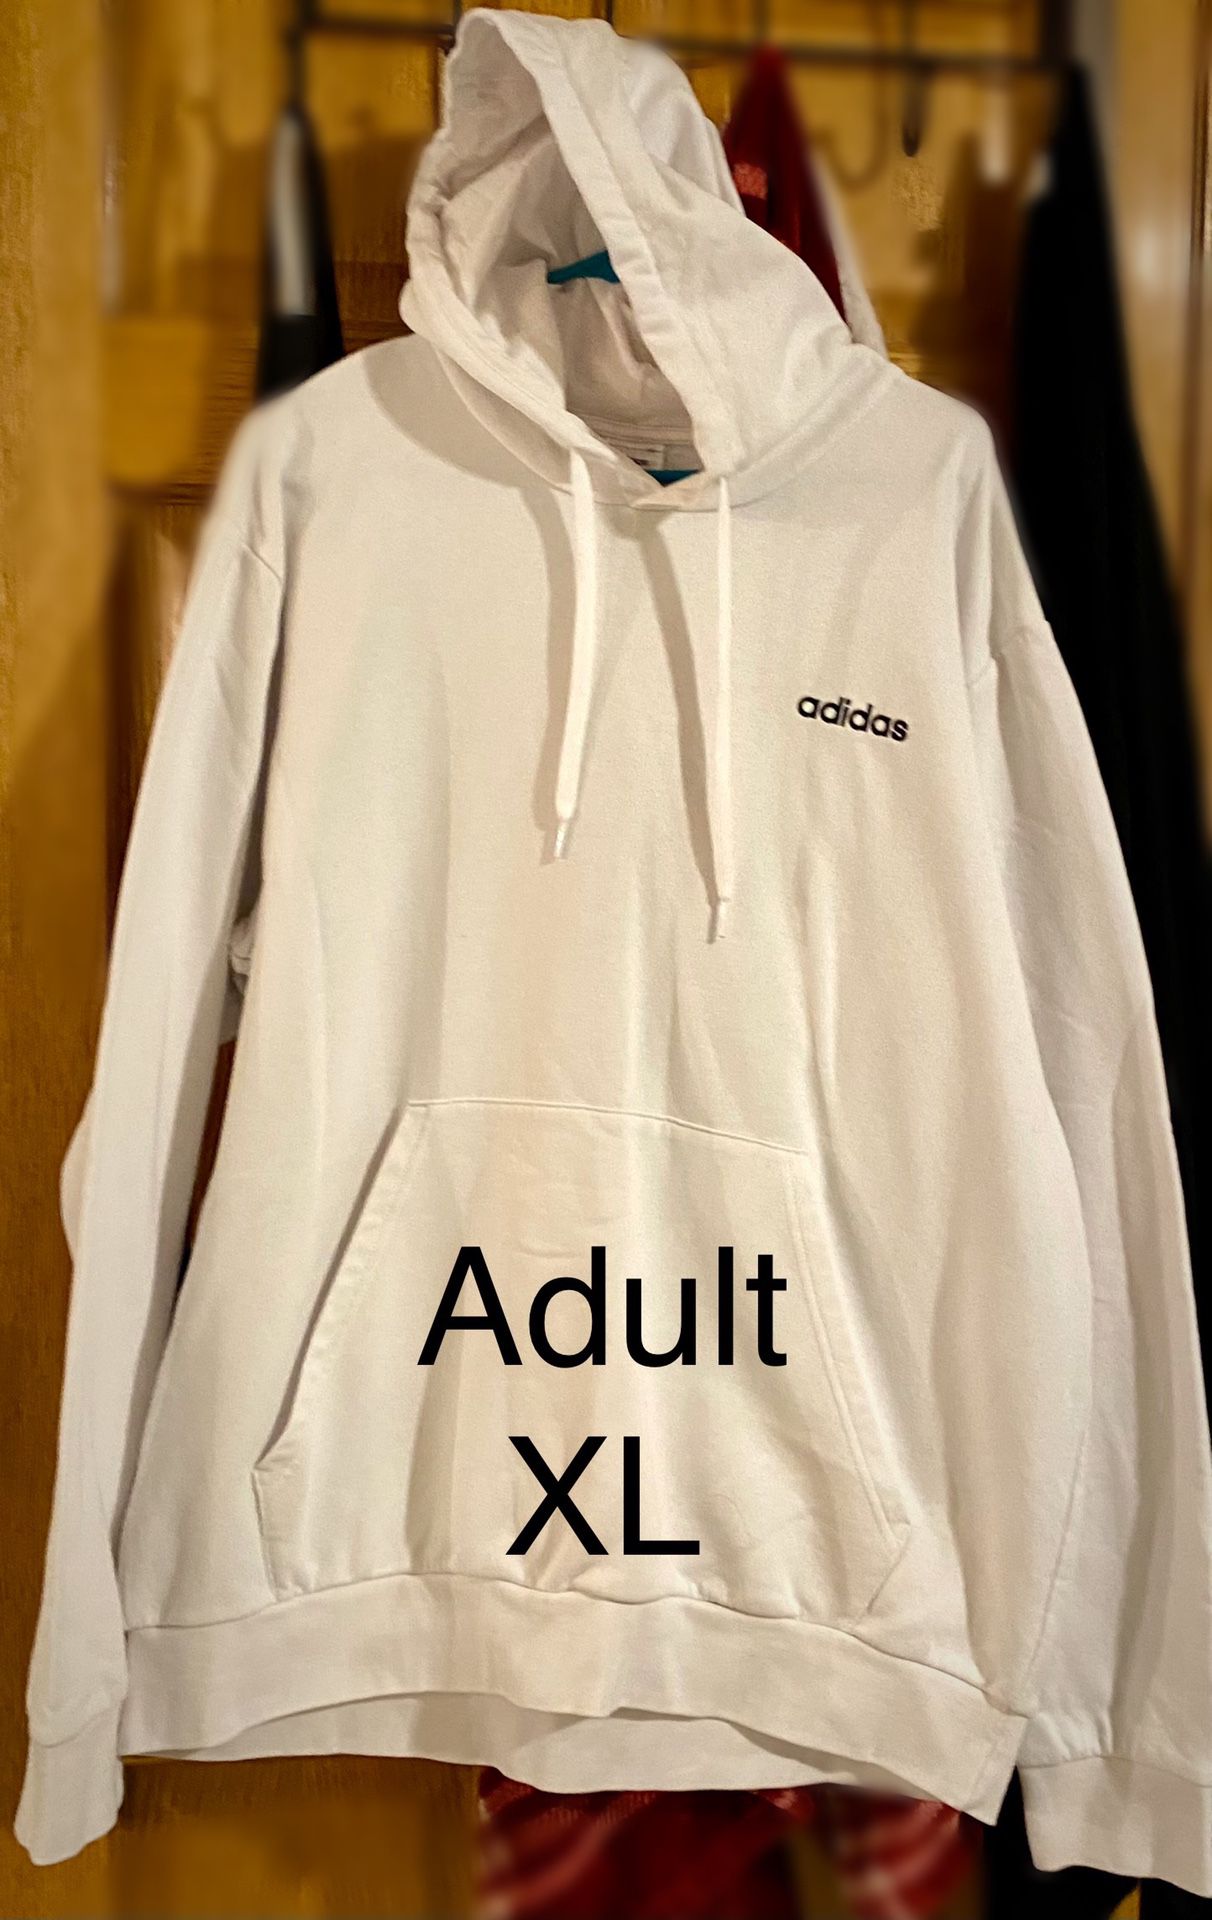 Adidas XL White Sweatshirt hoodie Like New Adult 